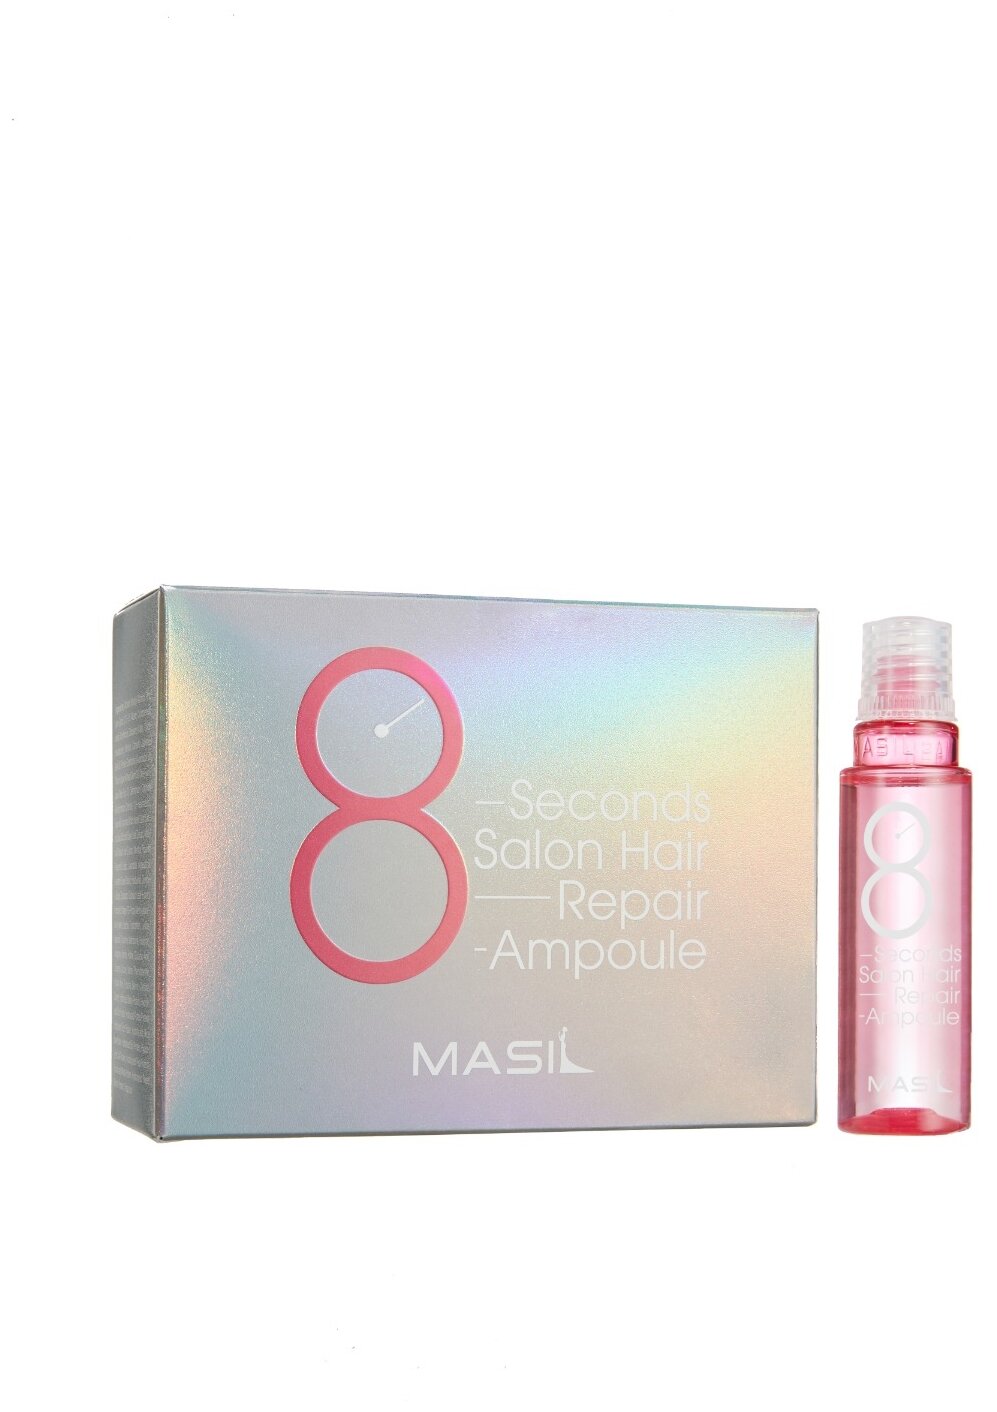 Masil Маска-филлер для восстановления волос с комплексом протеинов 8 Seconds Salon Hair Repair Ampoule